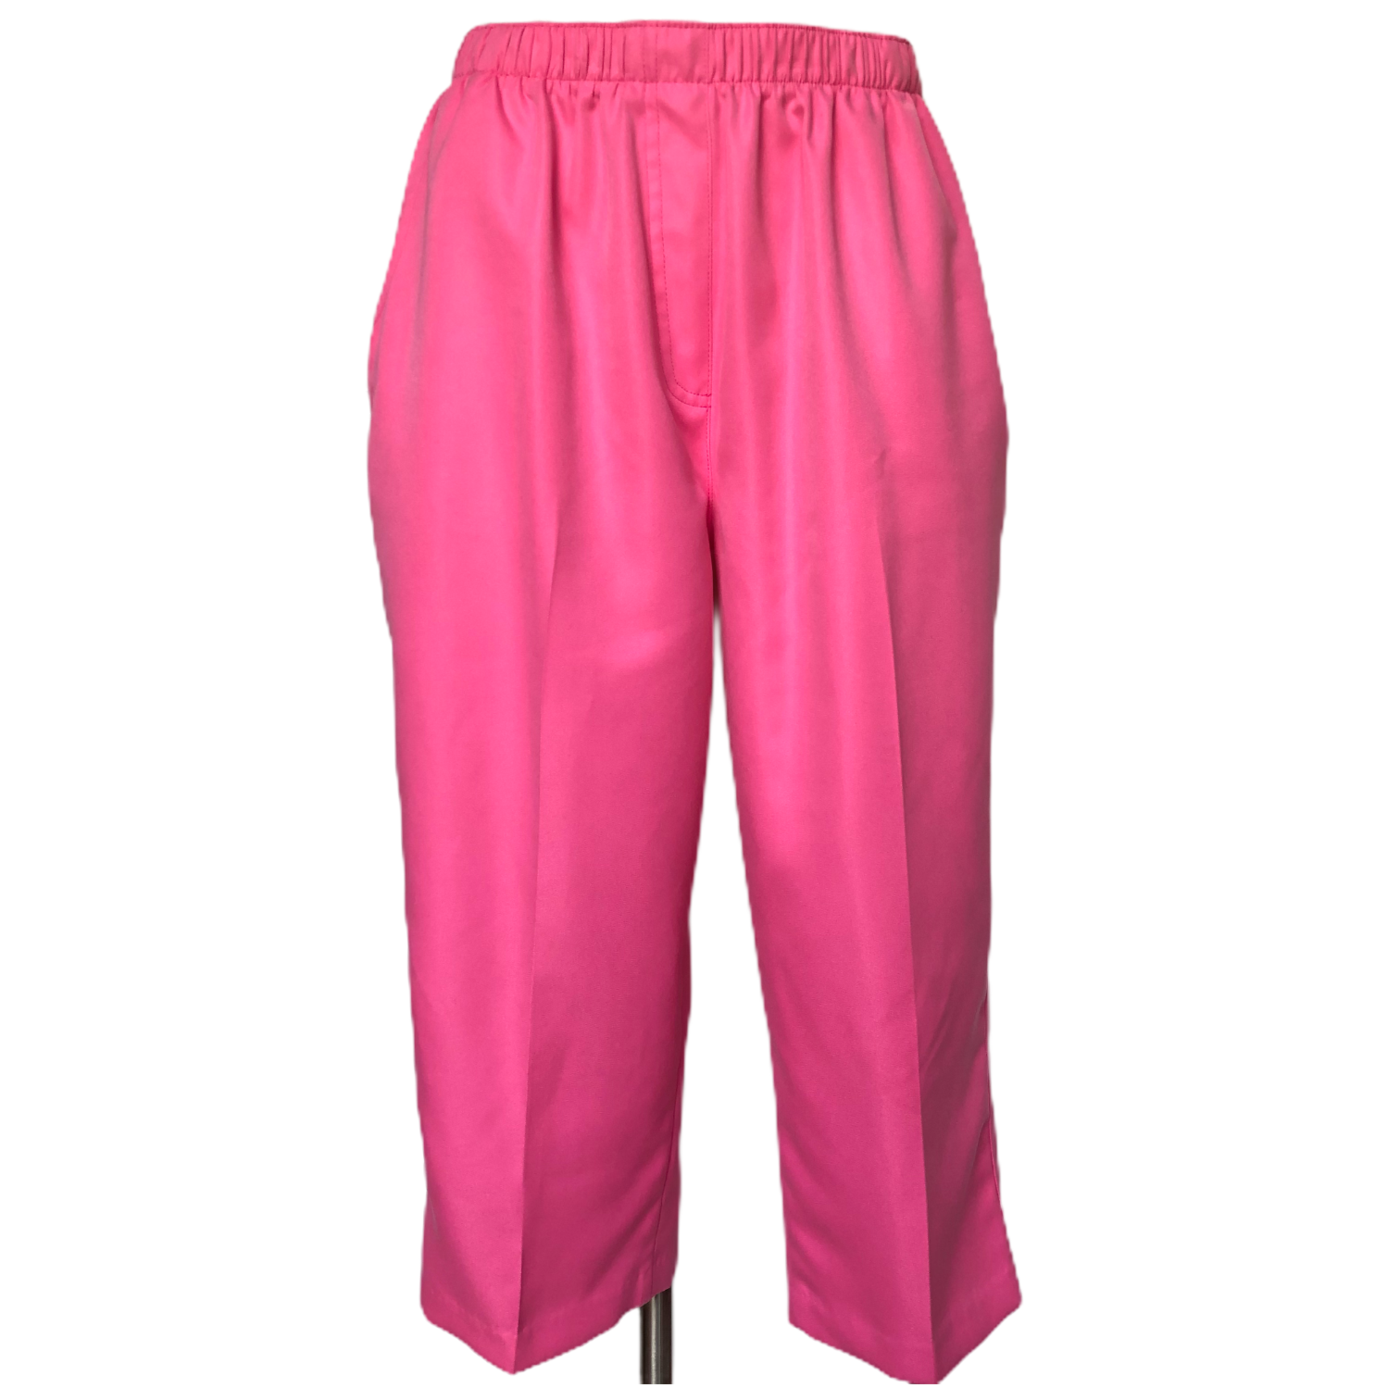 Alia Womens Elastic Waist Capris Pants | eBay